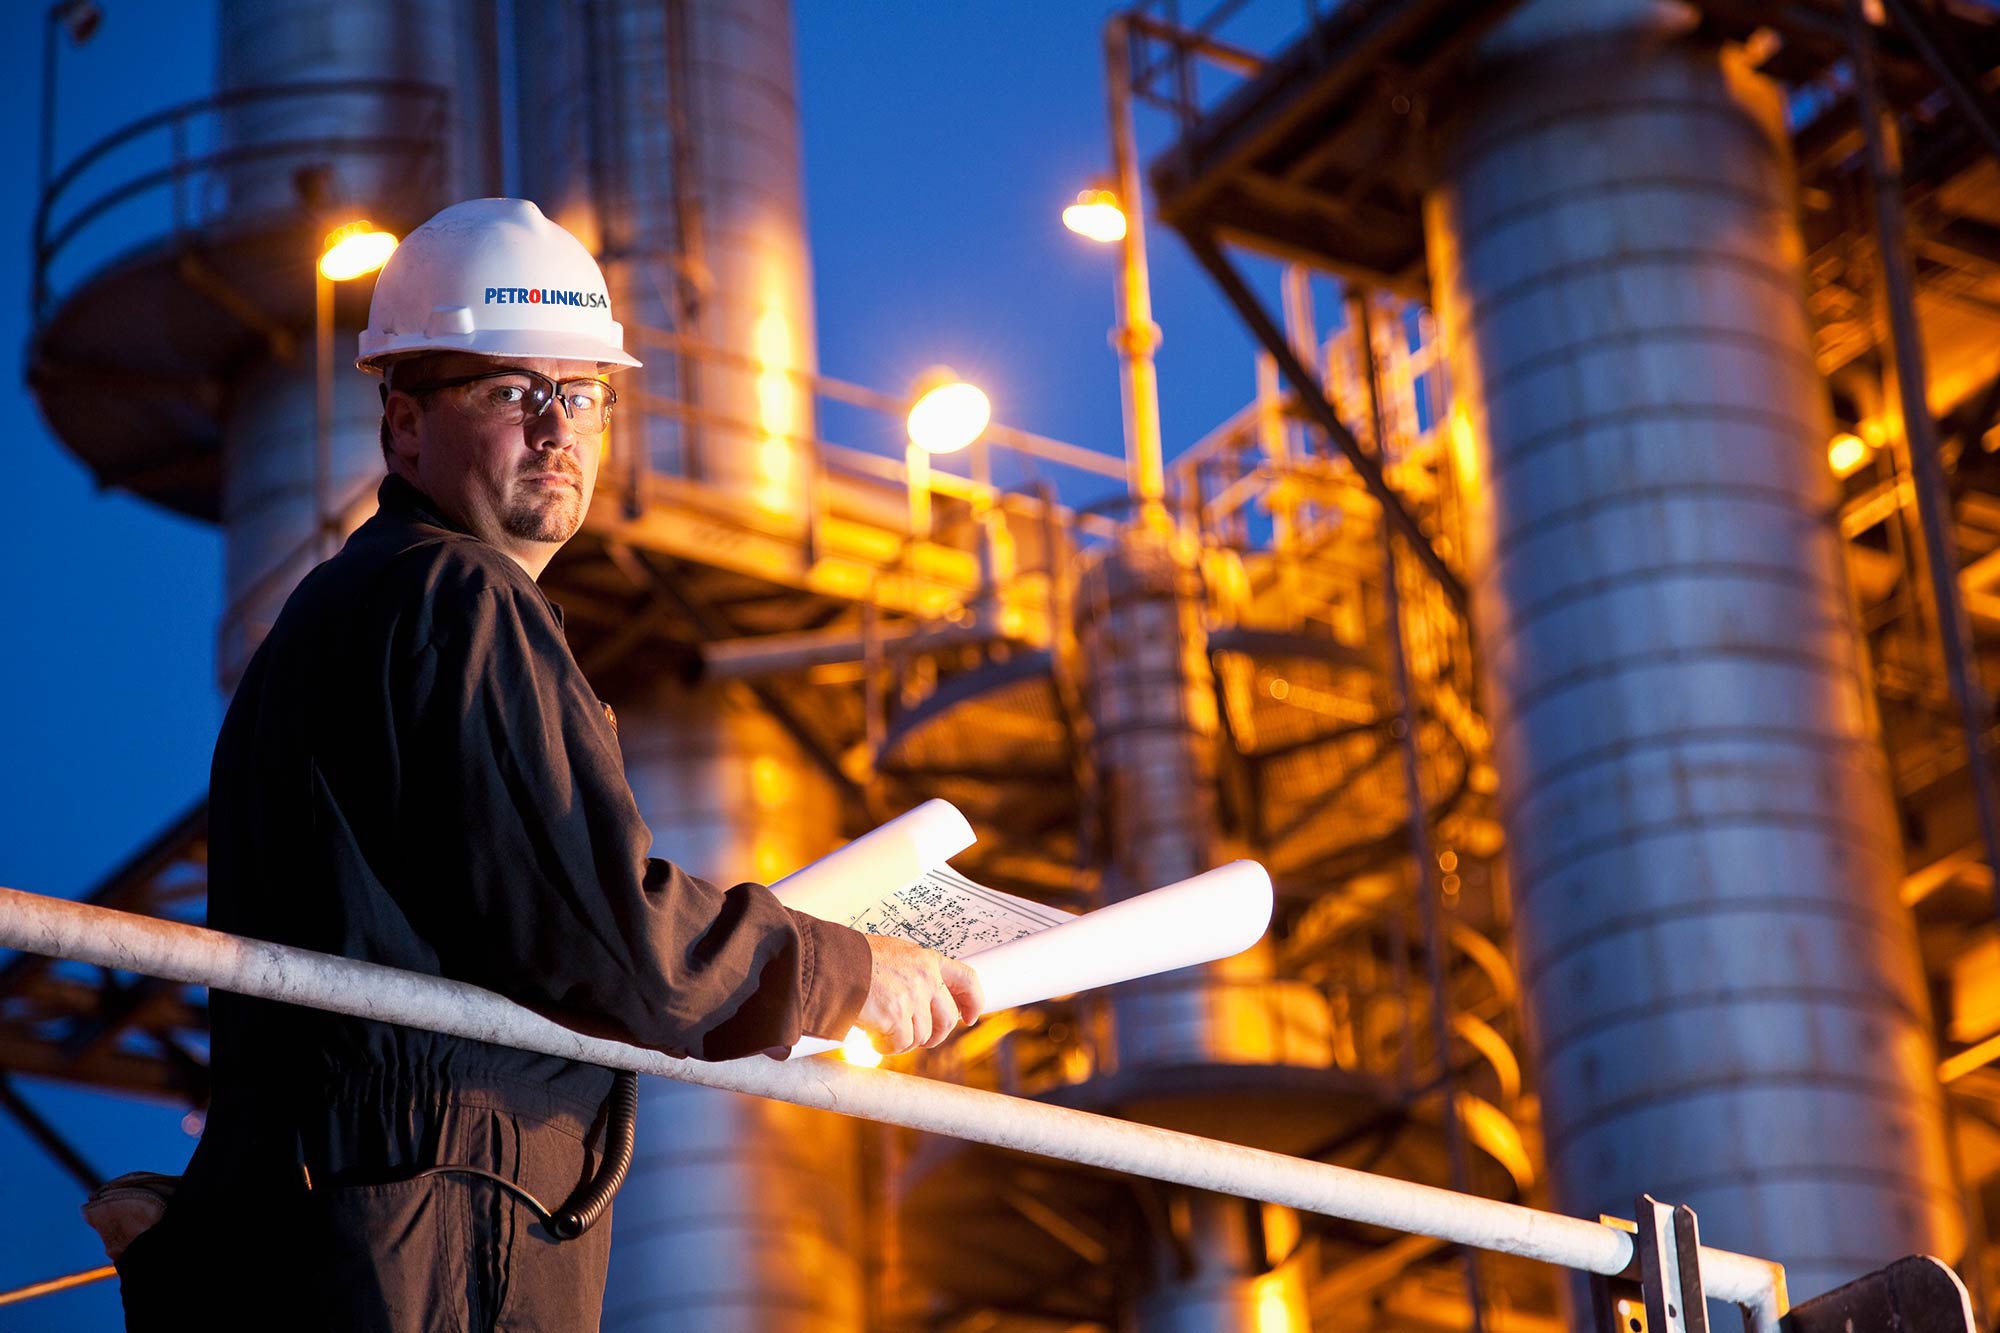 PetrolinksUSA Industrial Preventive Maintenance Services Company